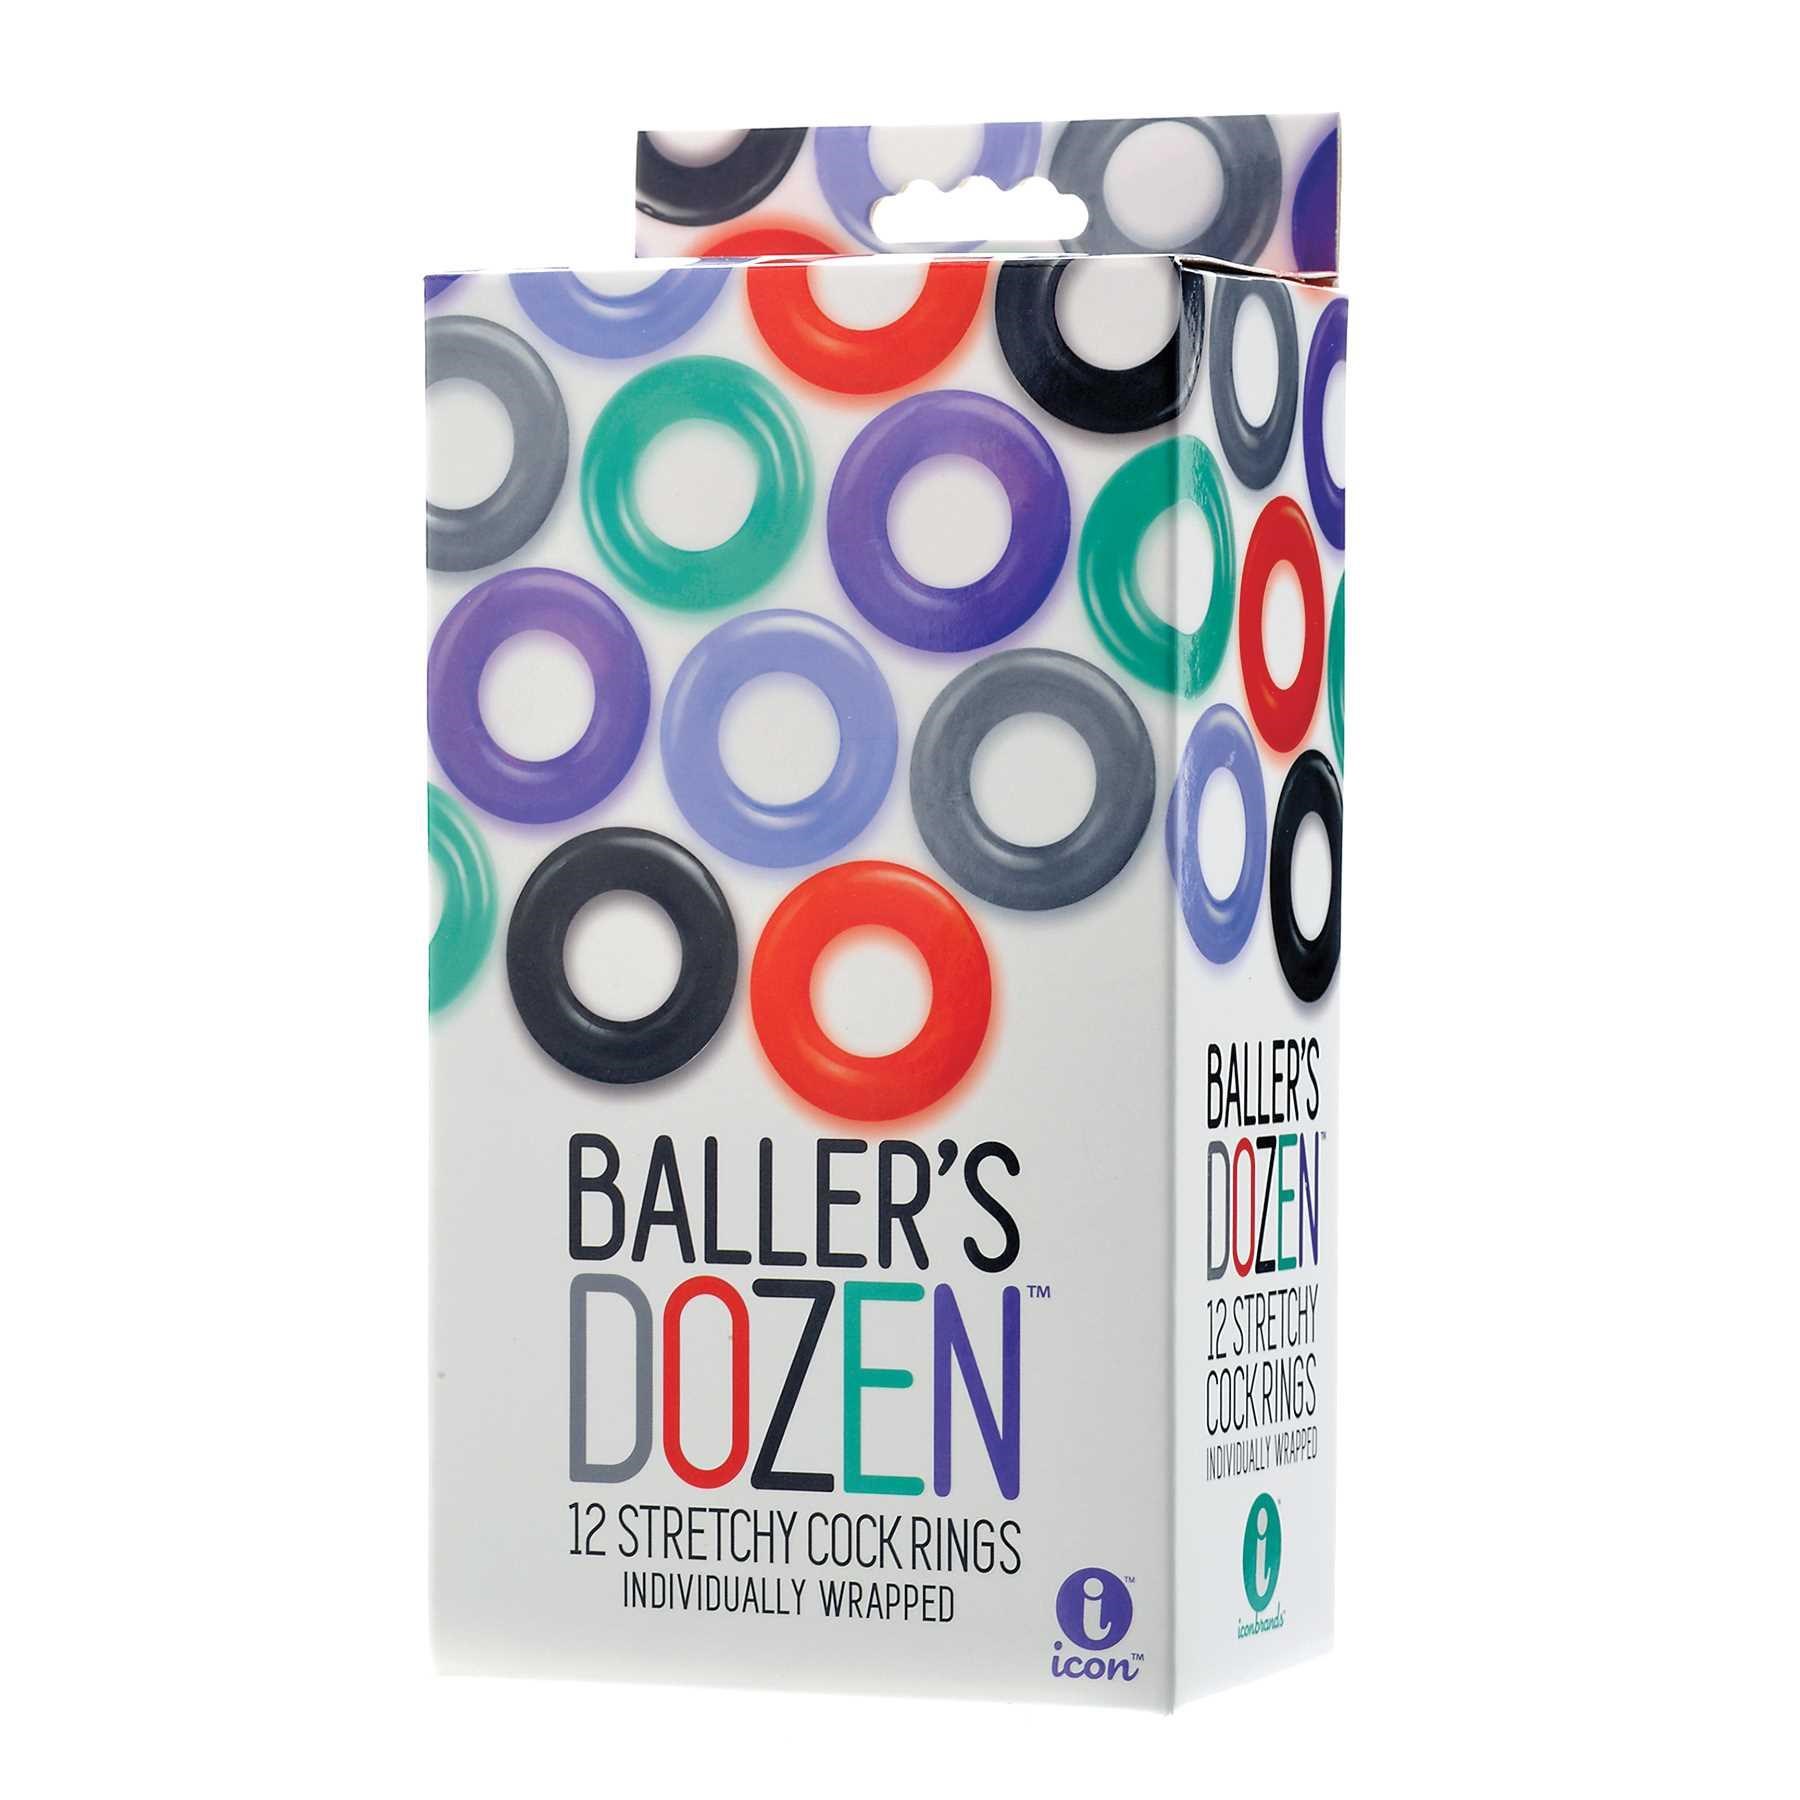 Baller's Dozen box packaging